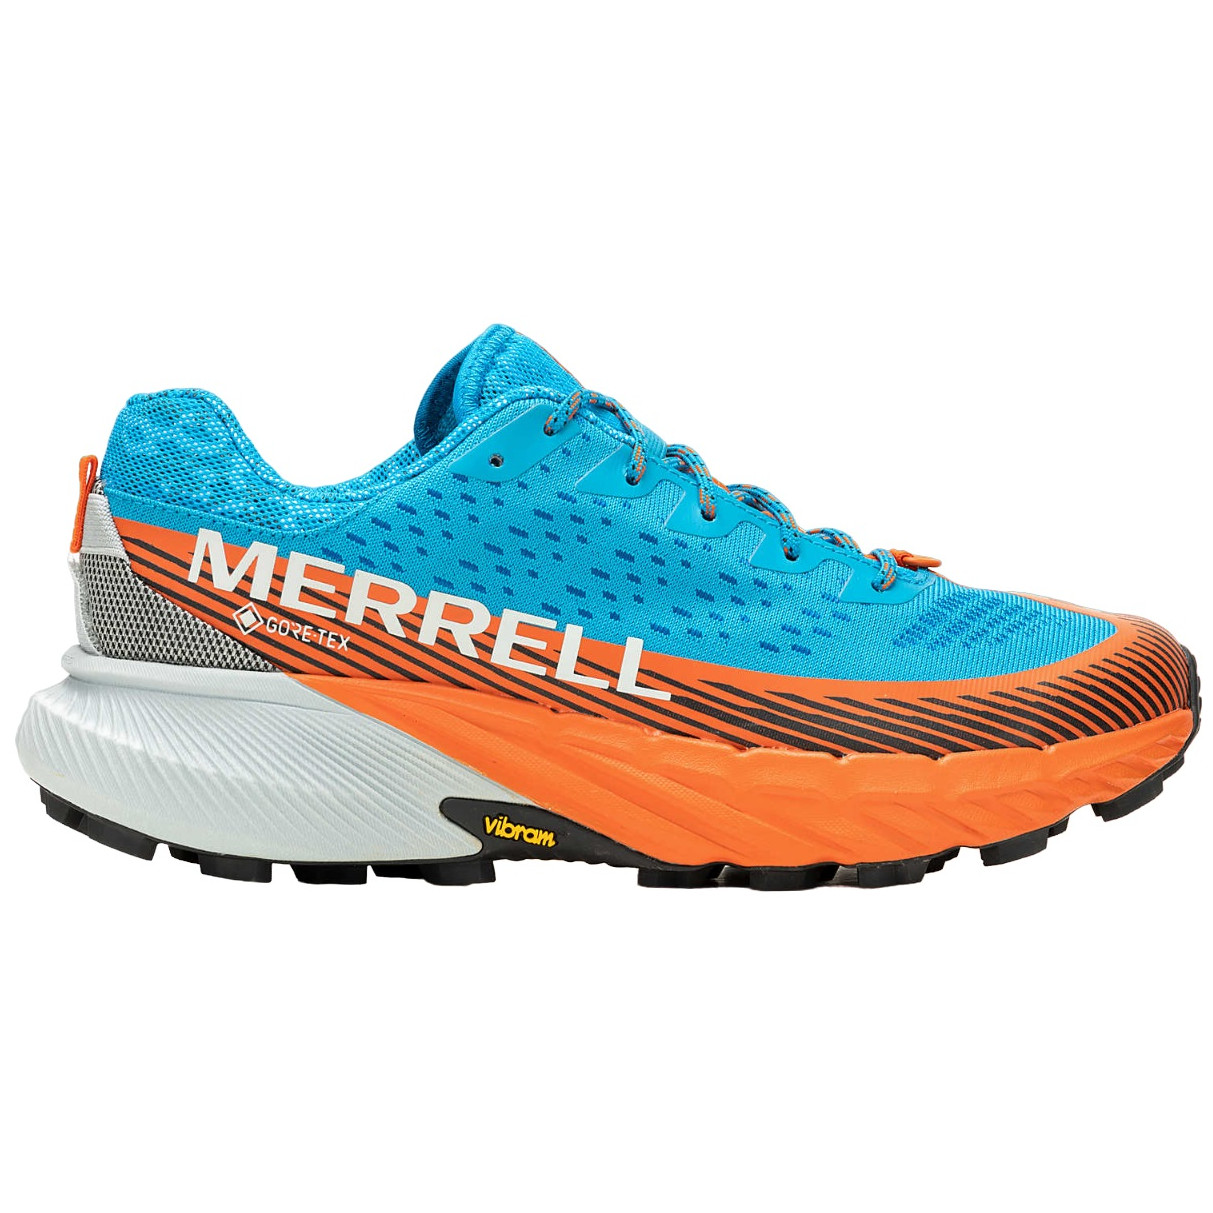 Pánské běžecké boty Merrell Agility Peak 5 Gtx Velikost bot (EU): 44 / Barva: modrá/oranžová